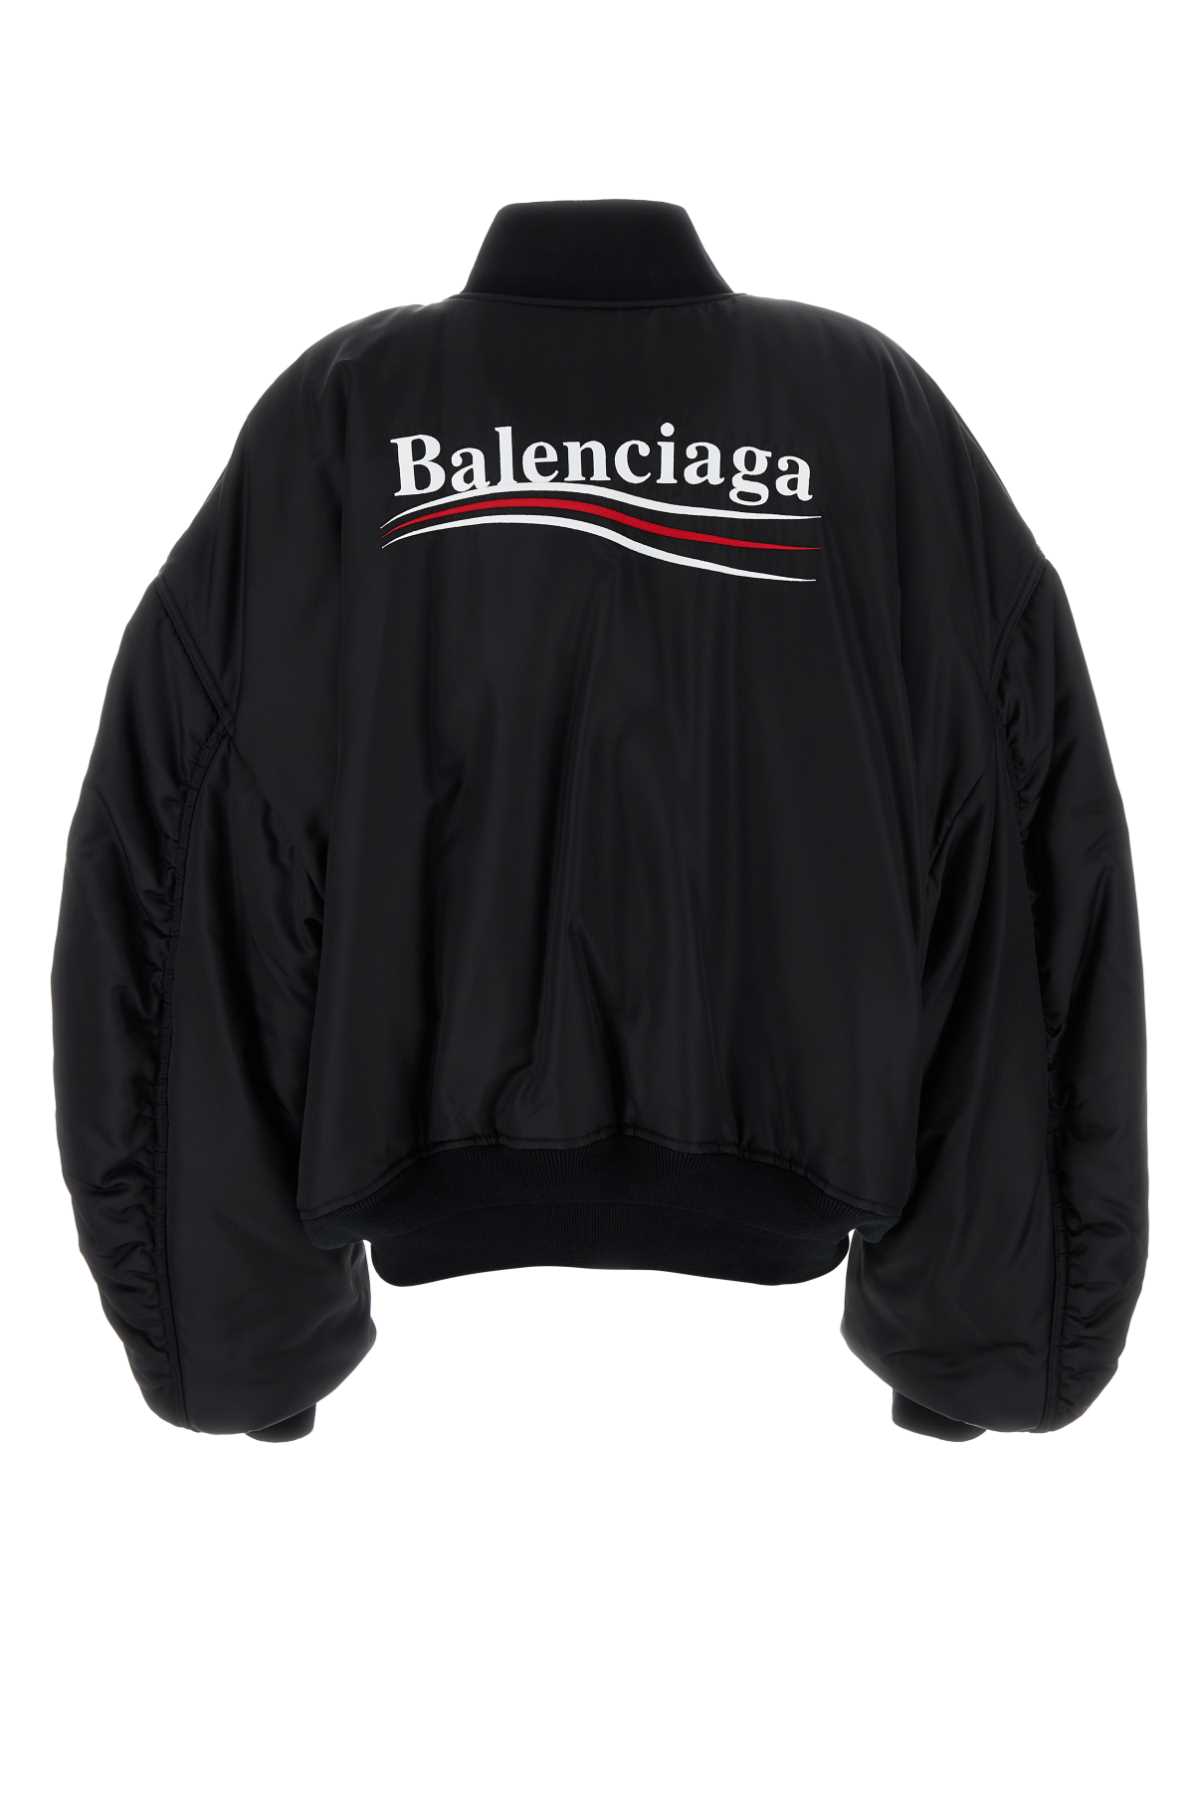 Balenciaga Black Nylon Padded Bomber Jacket